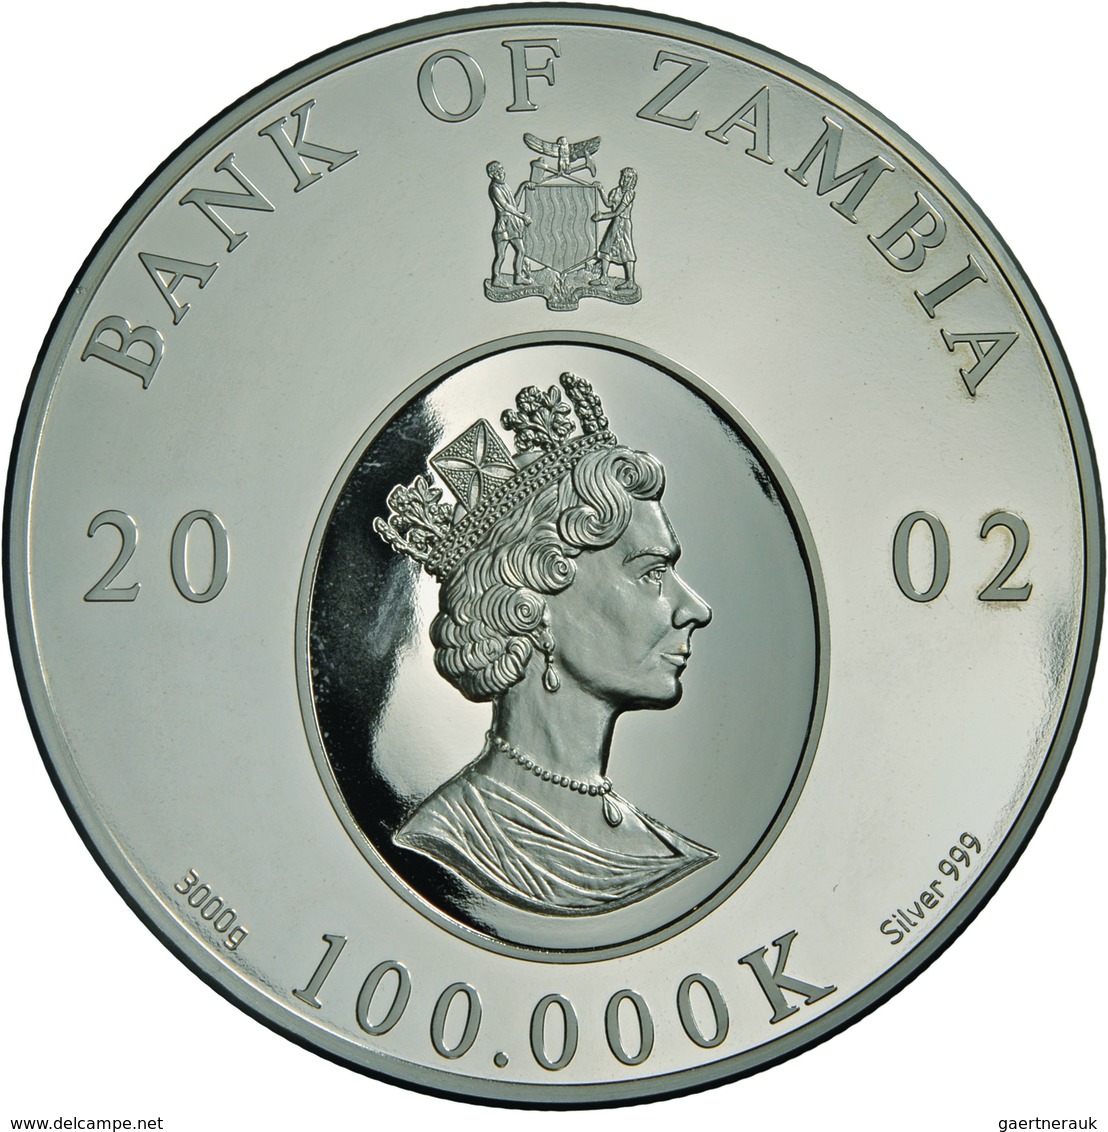 Sambia: 100.000 Kwacha 2002 Proof, HM Elizabeth Queen Mother 1900-2002, 3 Kg 999/1000 Fine Silver, S - Zambia